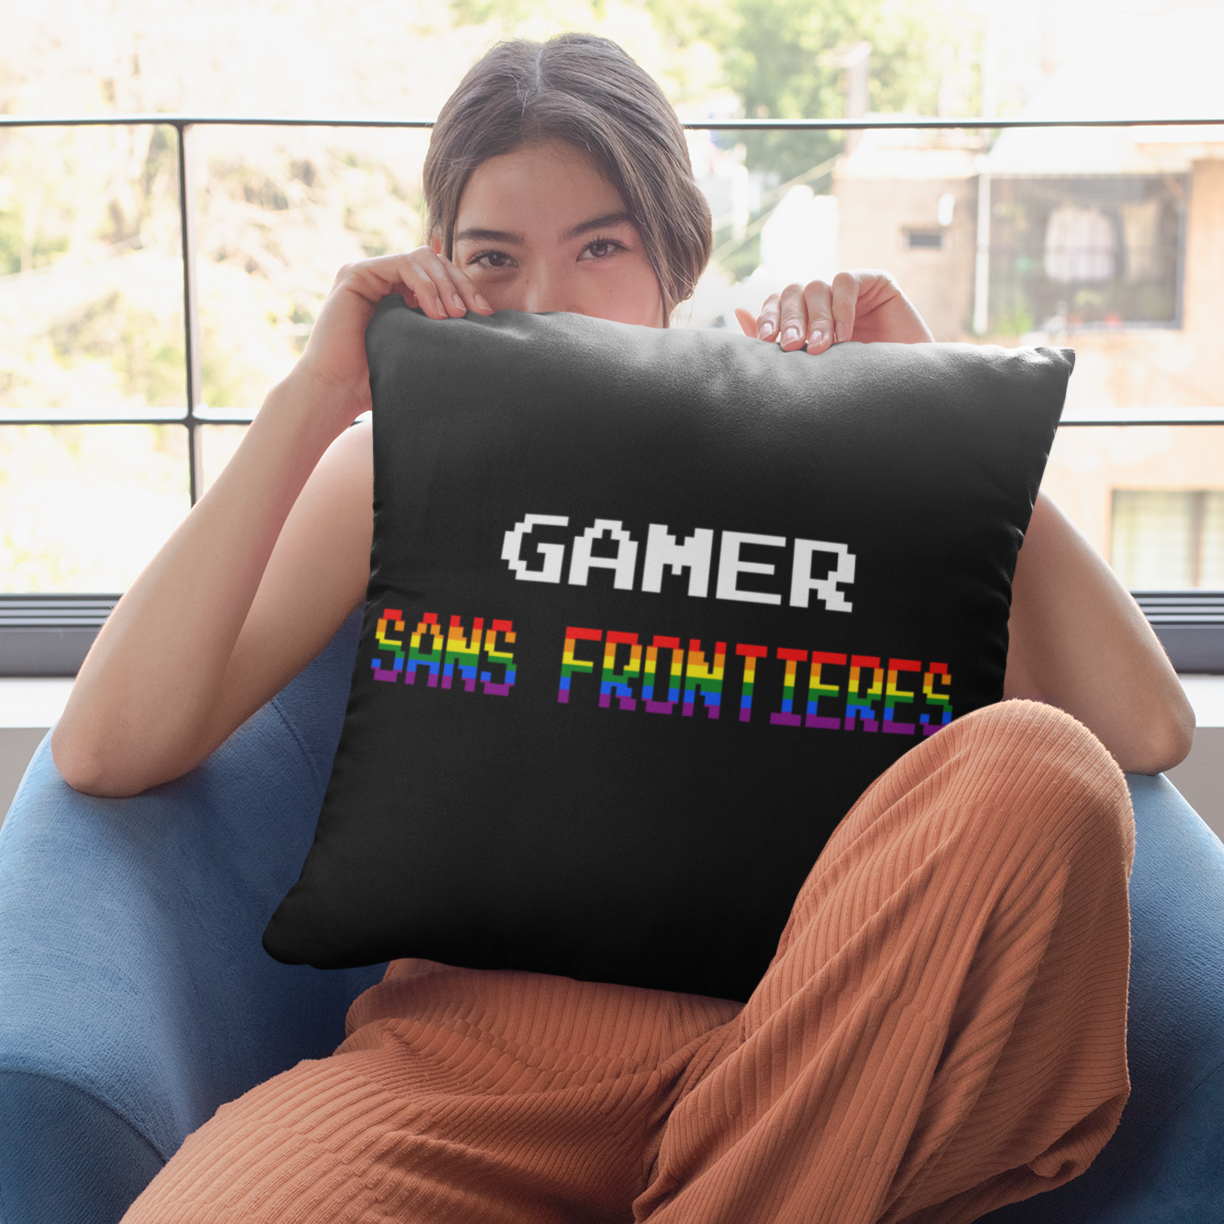 Gamers Sans Frontieres Pillow - LGTB+GSF